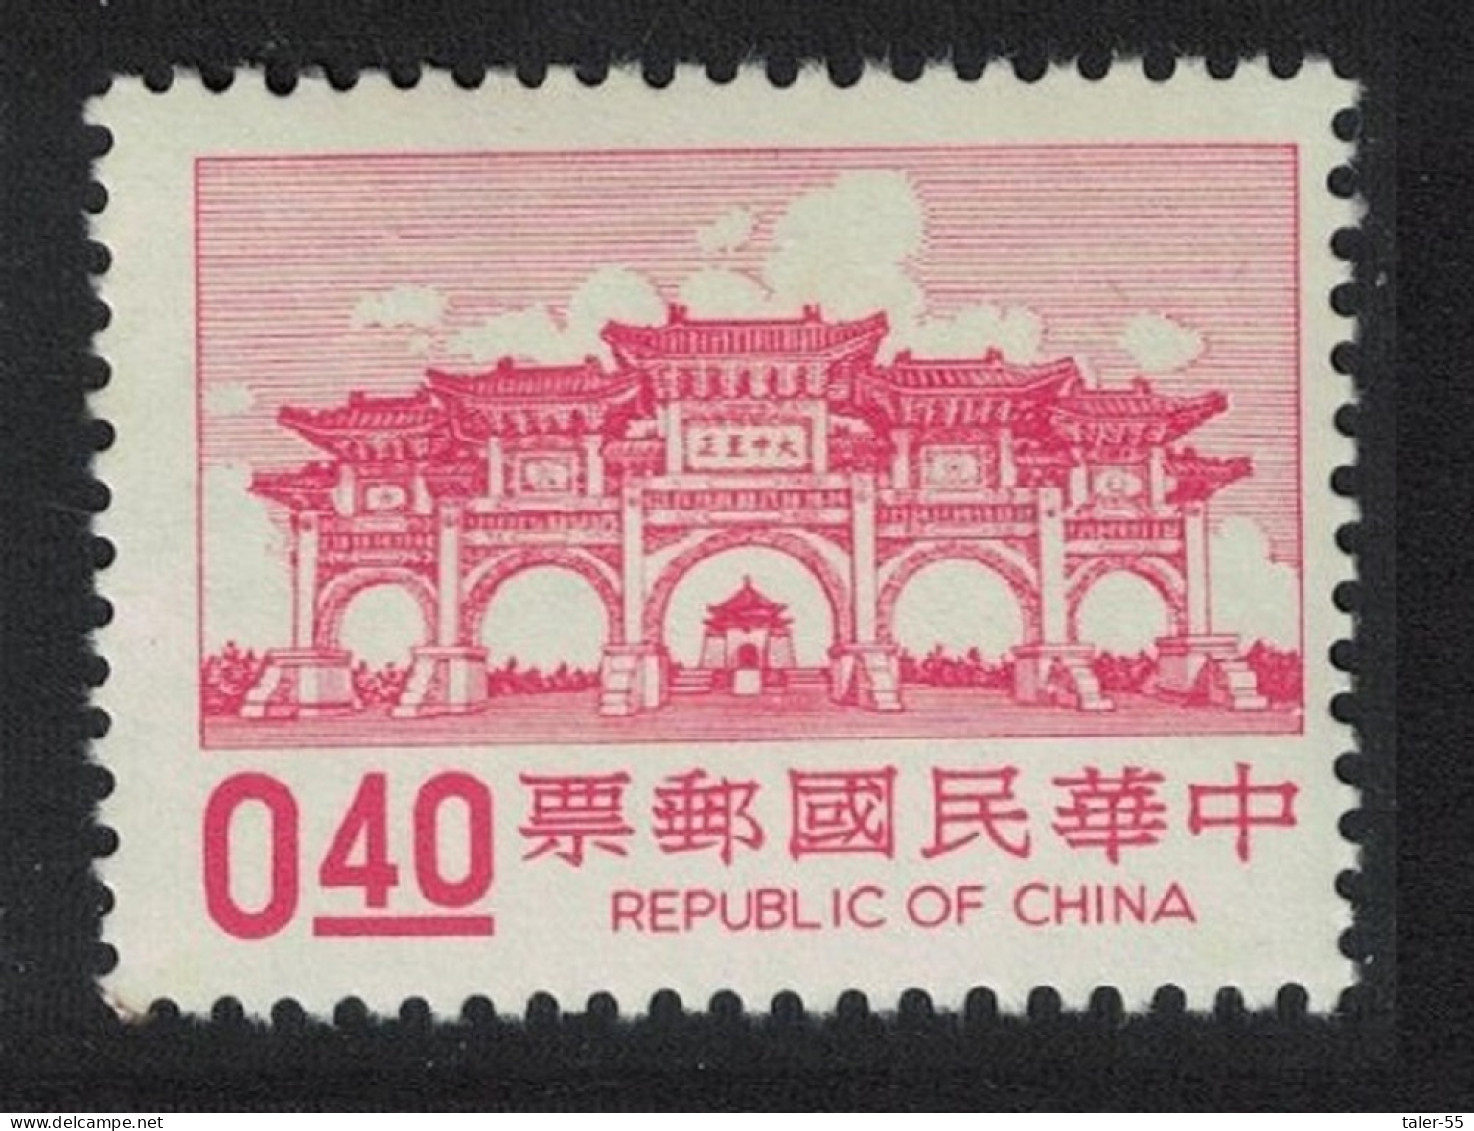 Taiwan Main Gate Chiang Kai-shek Memorial Hall $0.40 1981 MNH SG#1355 - Nuovi